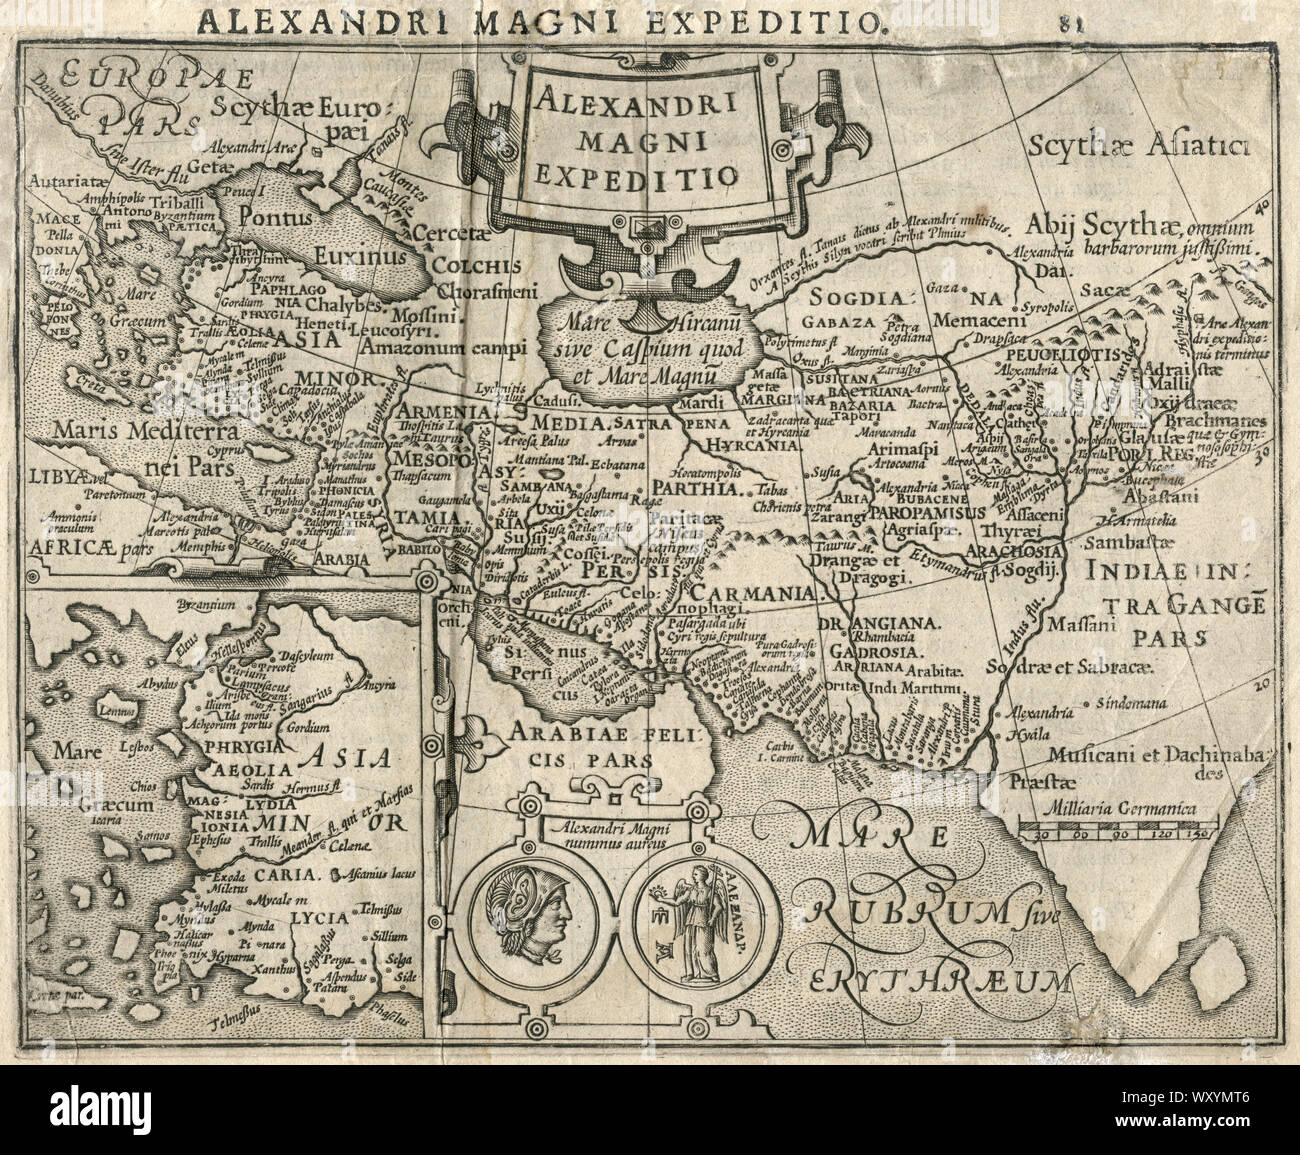 Alexandri Magni Expeditio., Map of Alexander the Great's Expedition, by Jodocus Hondius the Elder, 1625 Stock Photo